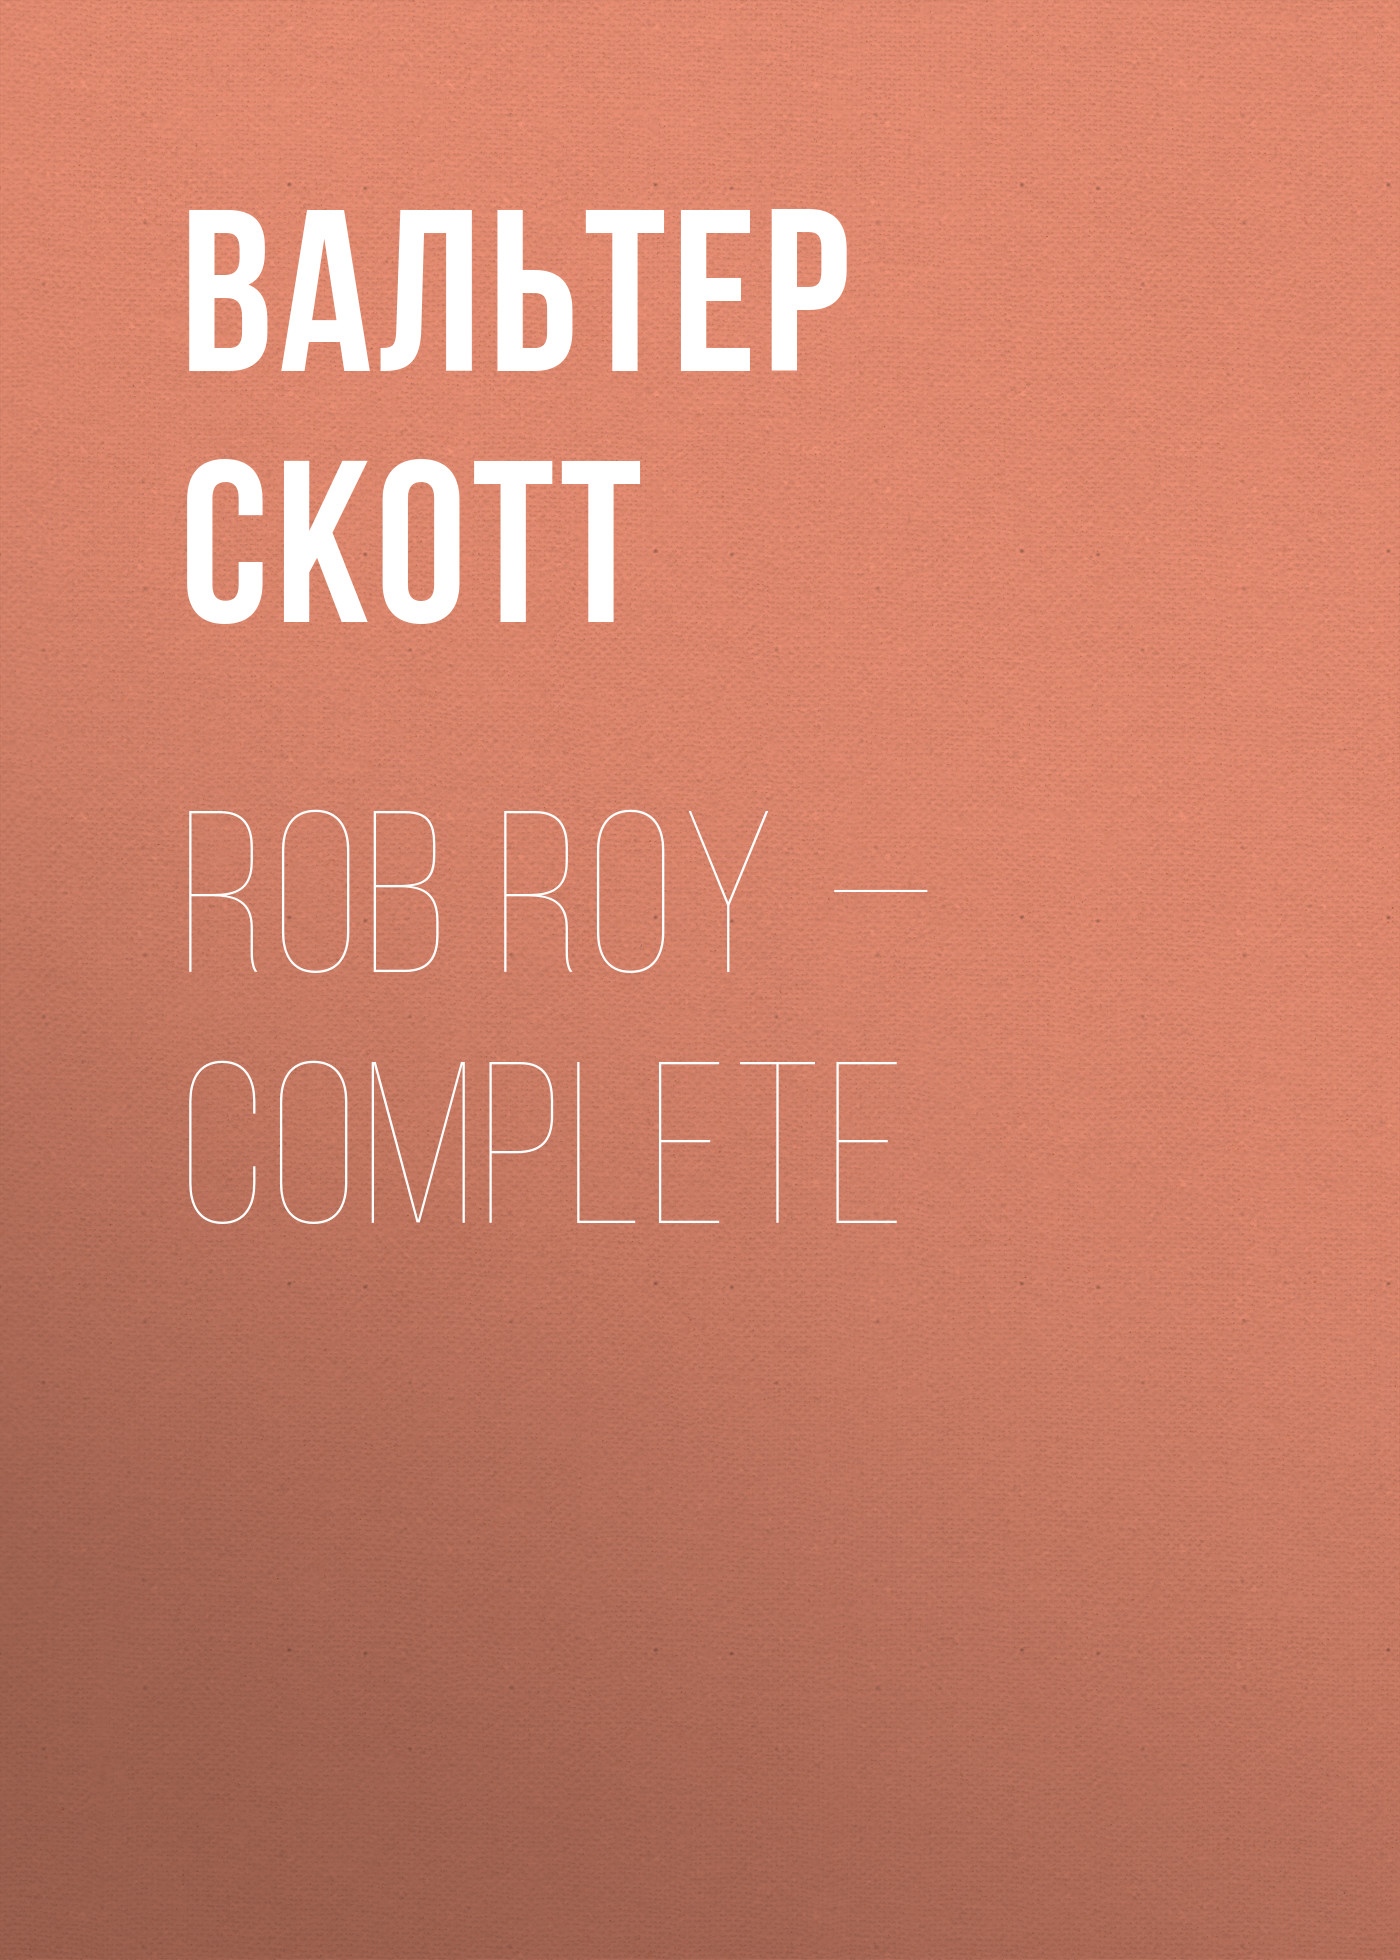 Rob Roy– Complete